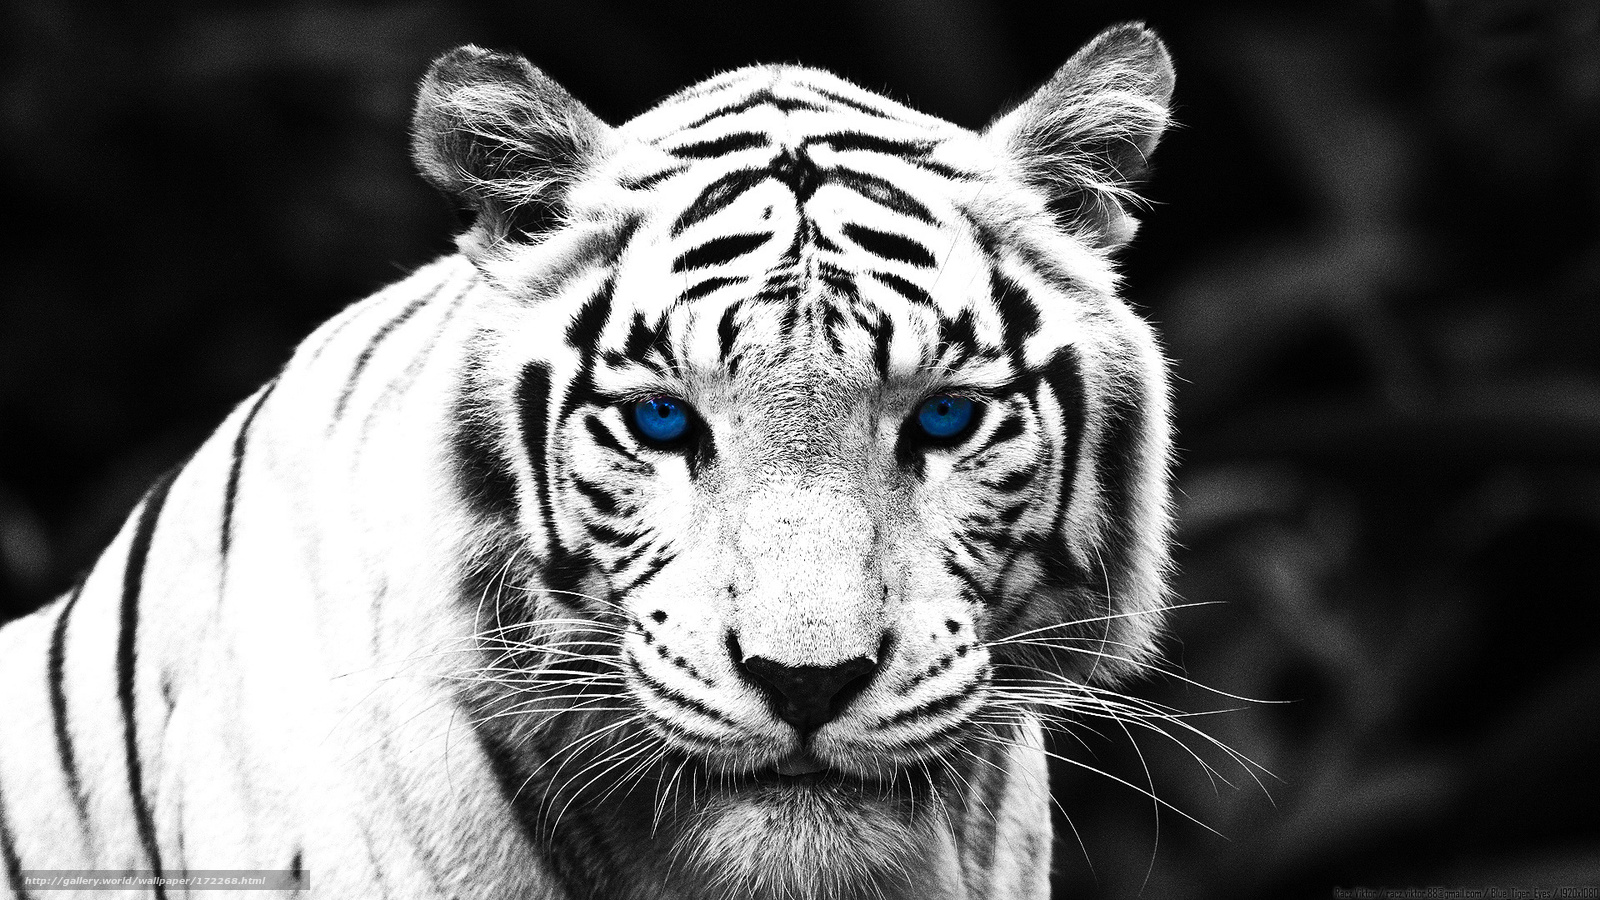 Download wallpaper tiger black and white free desktop wallpaper in